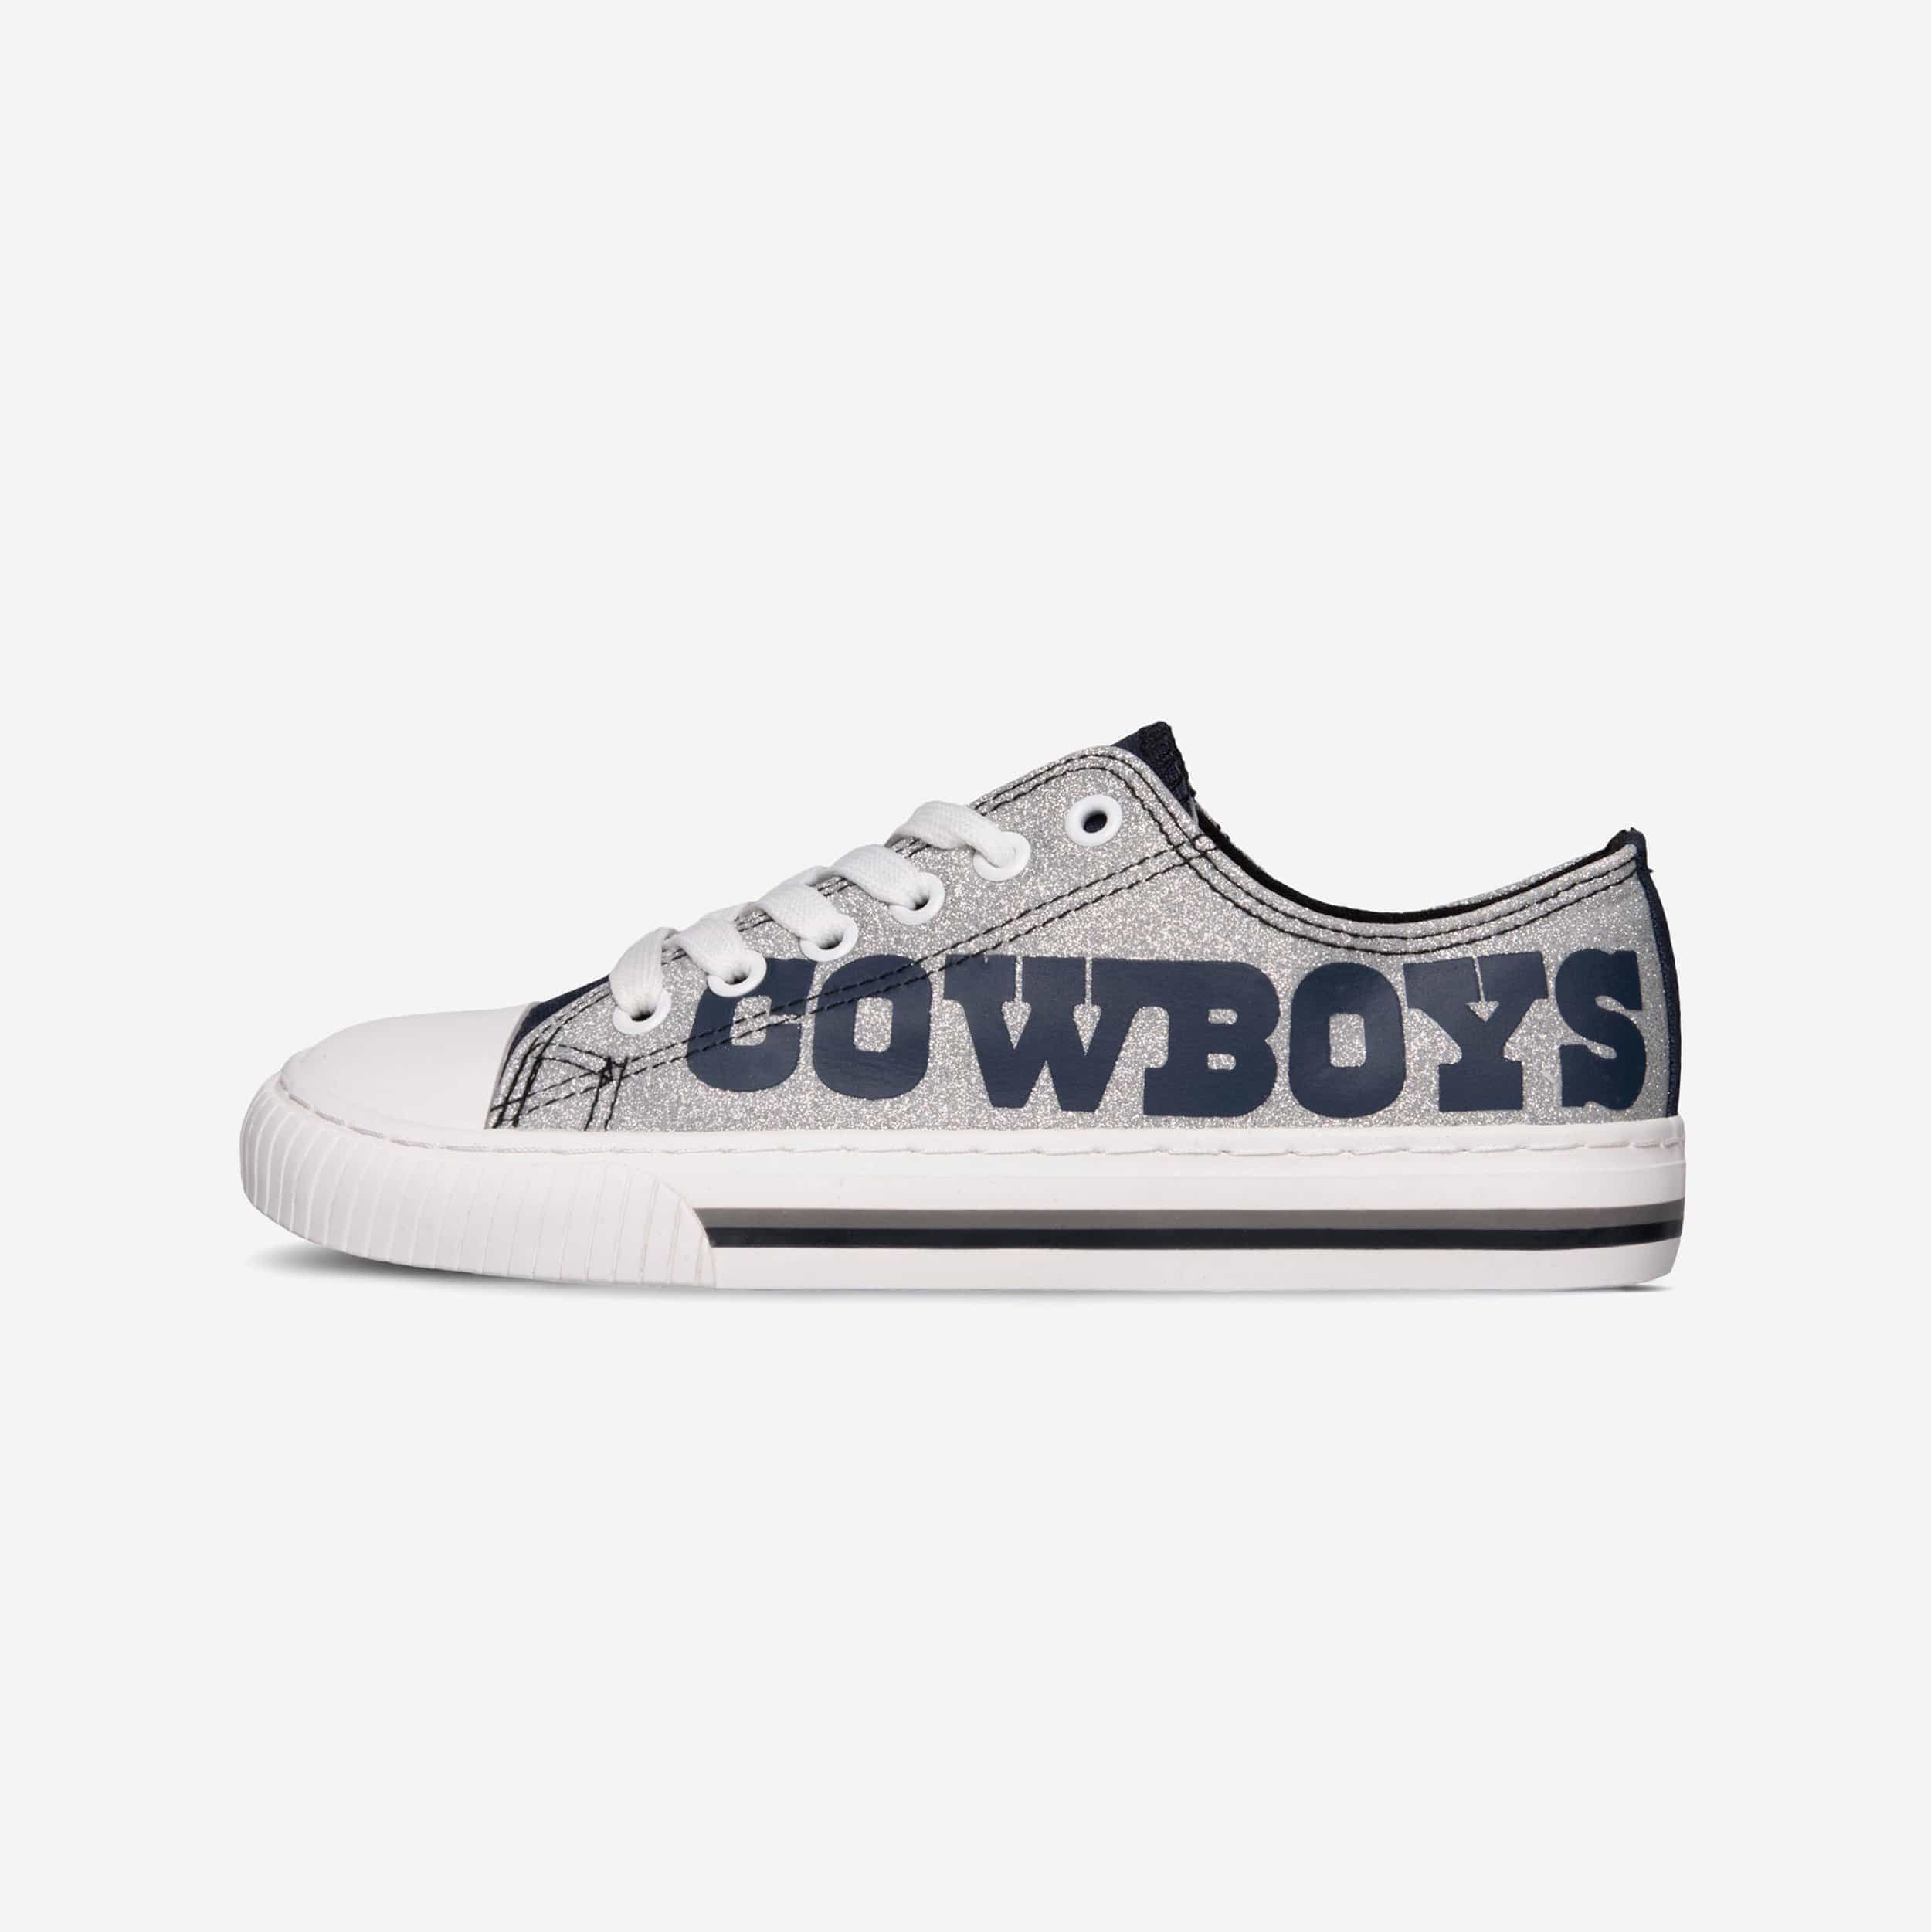 FOCO Dallas Cowboys NFL Womens Calf Logo Black Leggings